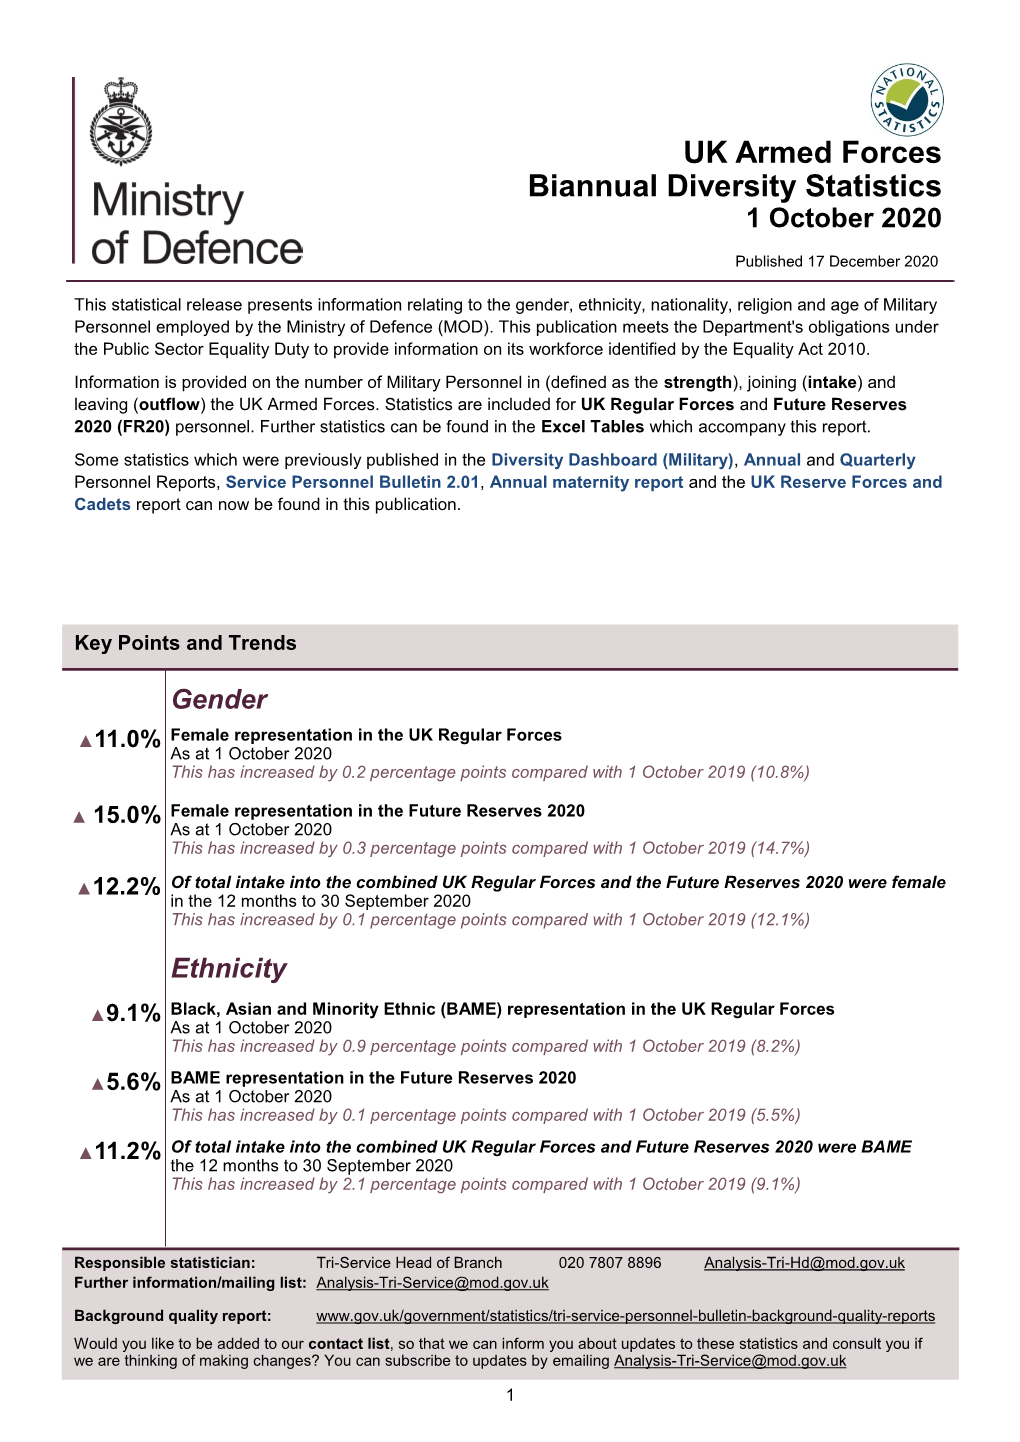 UK Armed Forces Biannual Diversity Statistics 1 October 2020